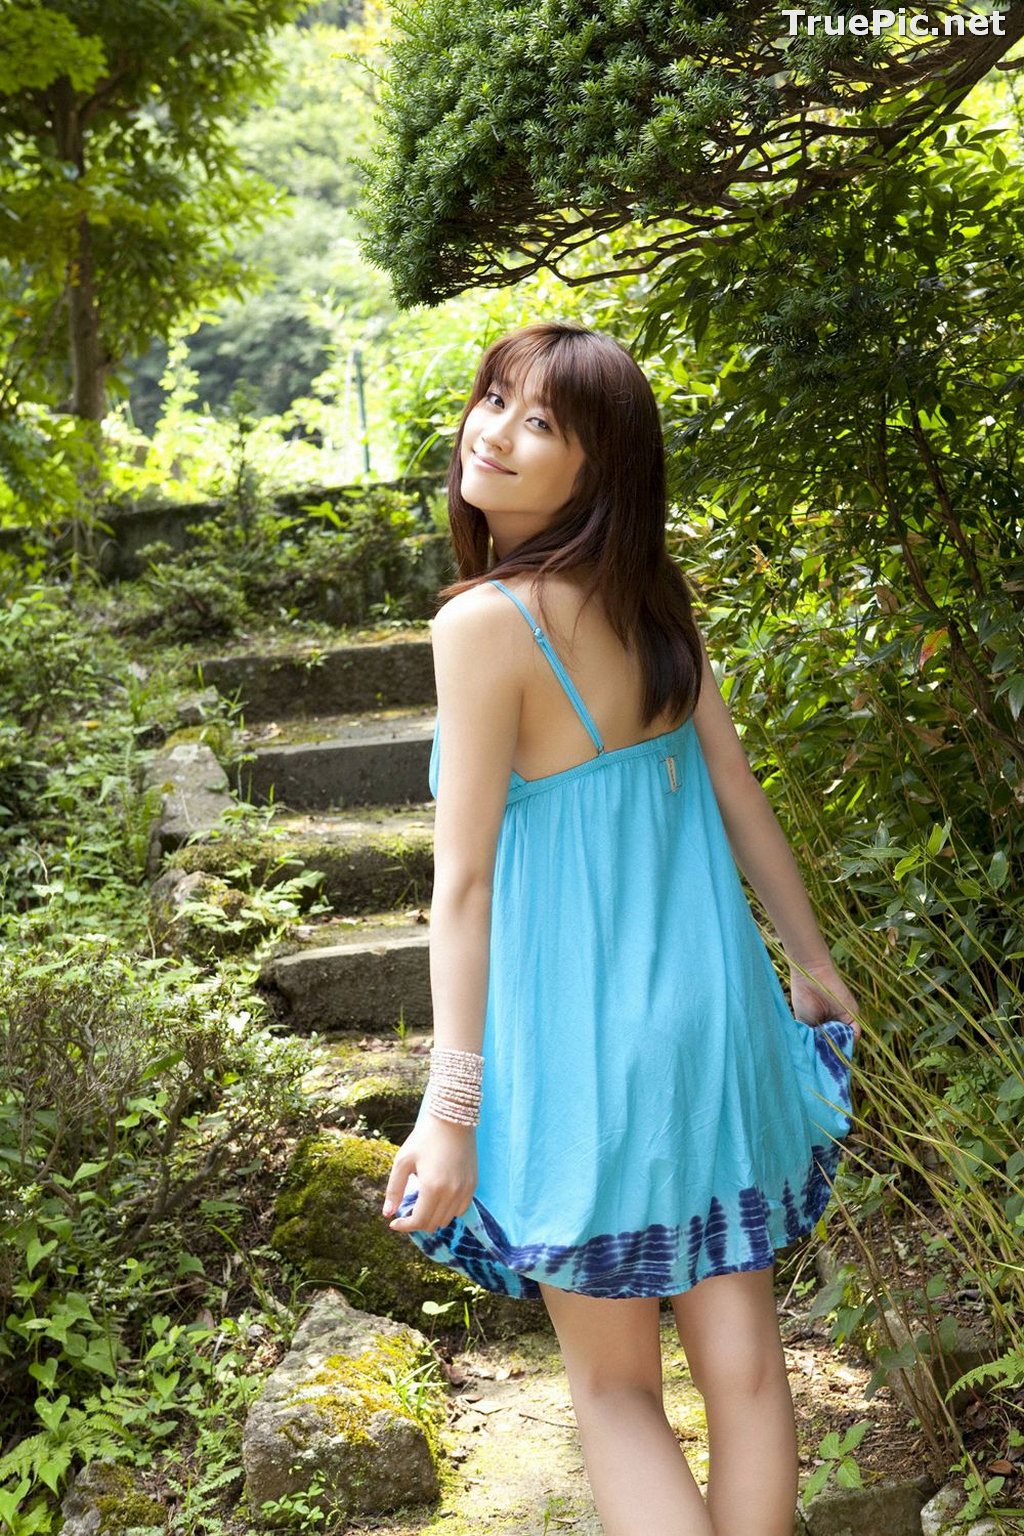 Image [YS Web] Vol.372 - Japanese Gravure Idol - Megumi Hara - TruePic.net - Picture-45